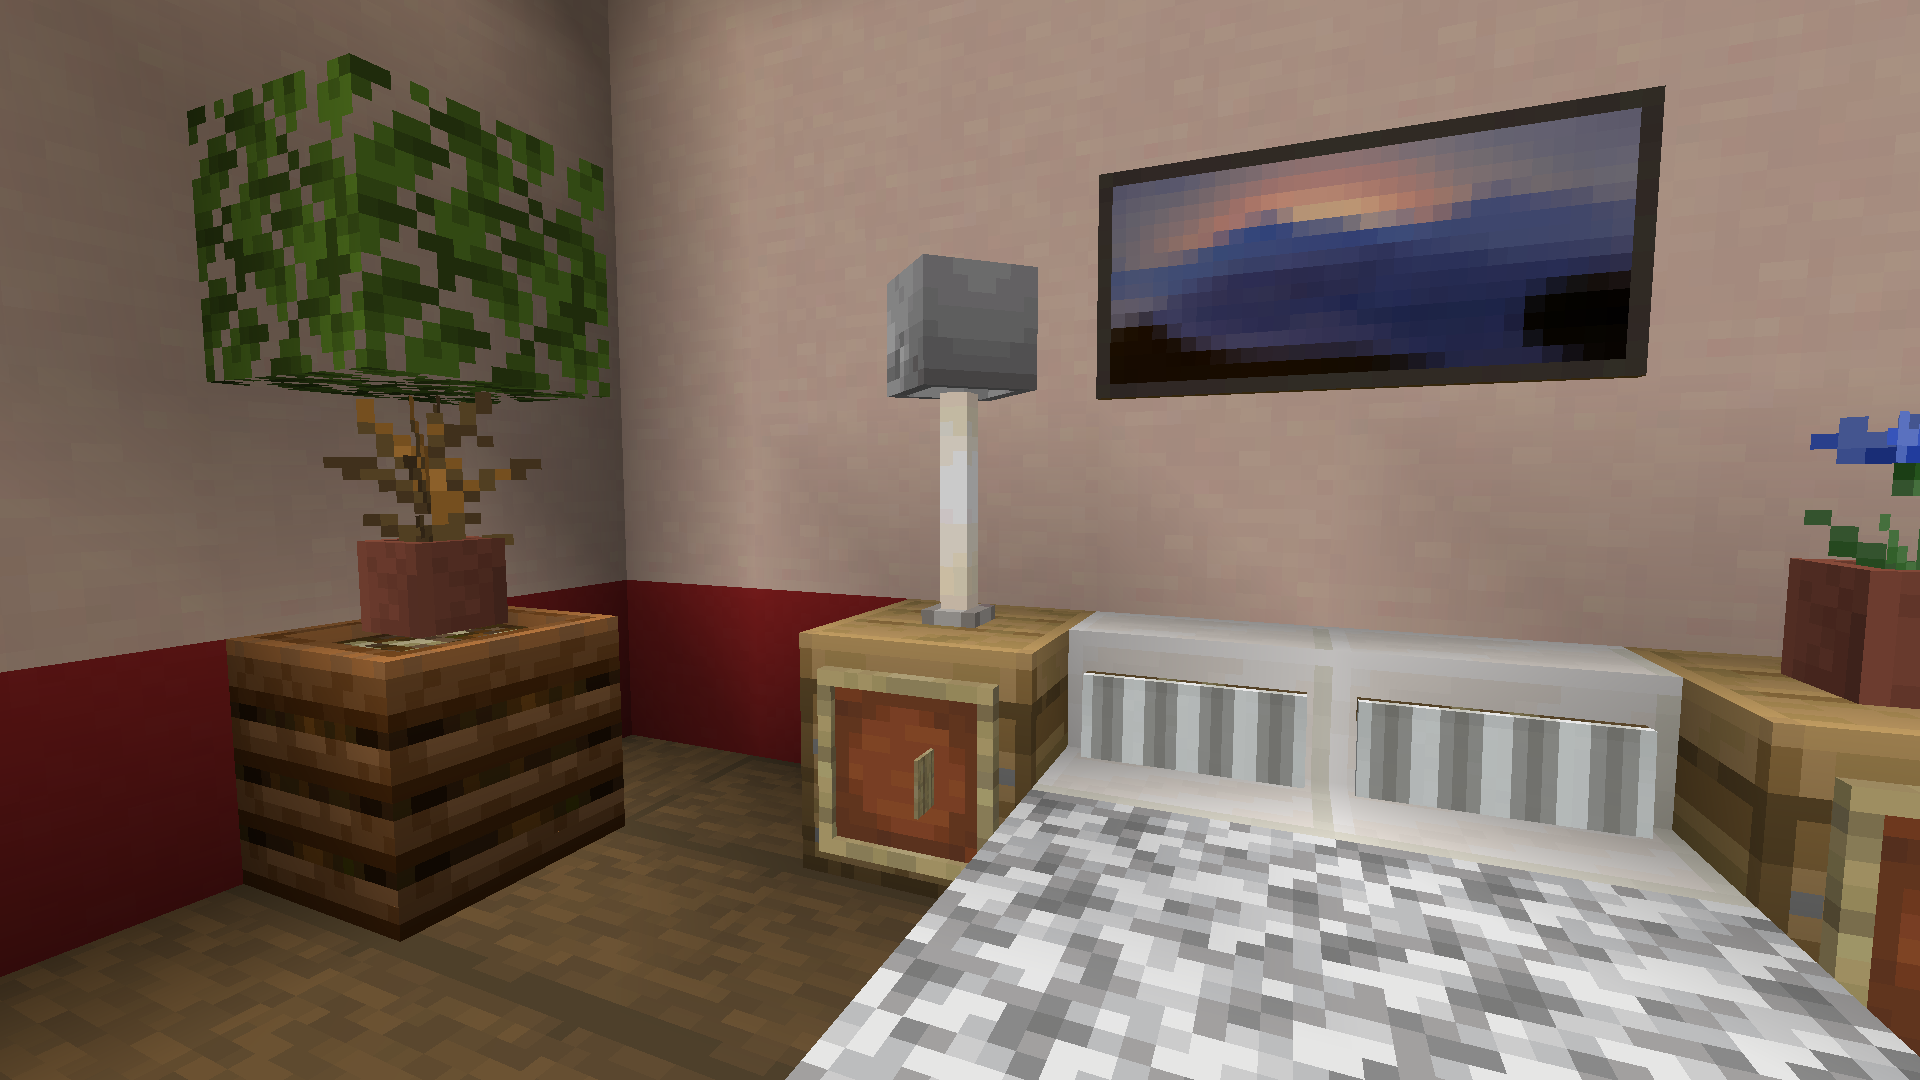 Table Lamp Minecraft Furniture